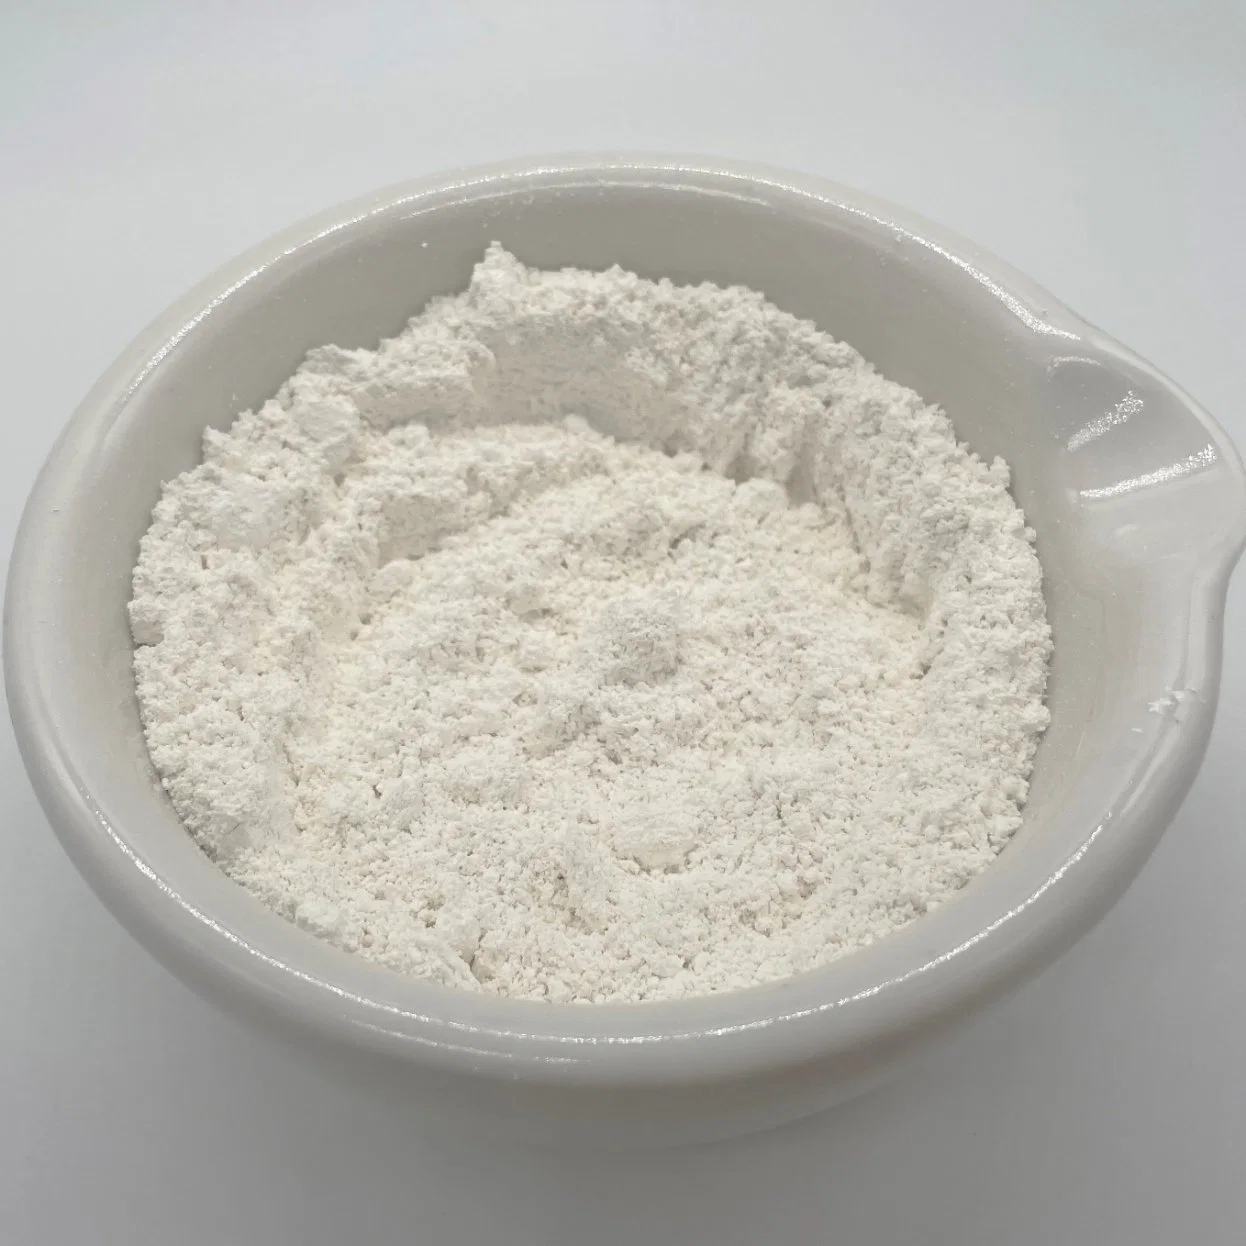 Sinobio Bistrifluoromethanesulfonimide sal de lítio (LiTFSi) CAS 90076-65-6